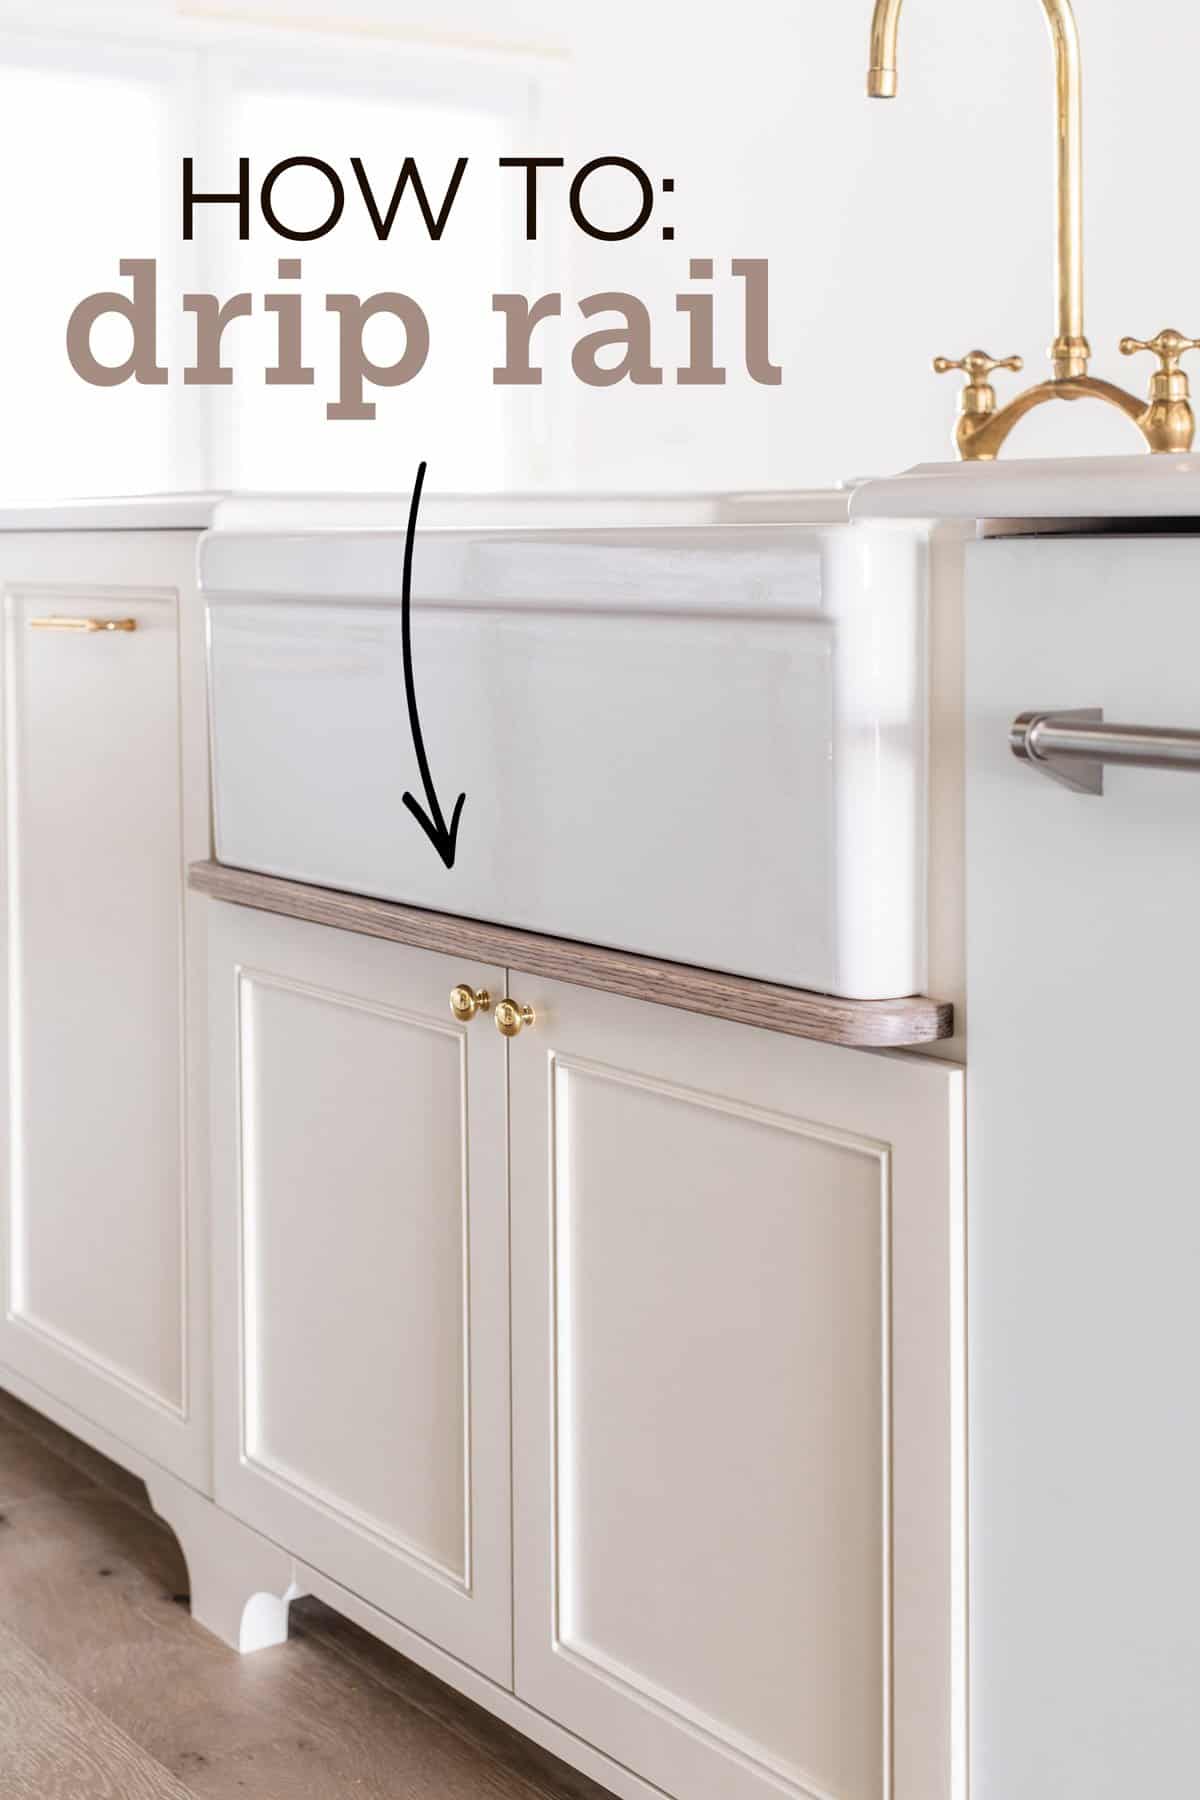 How to Make a Sink Drip Rail - Jenna Sue Design